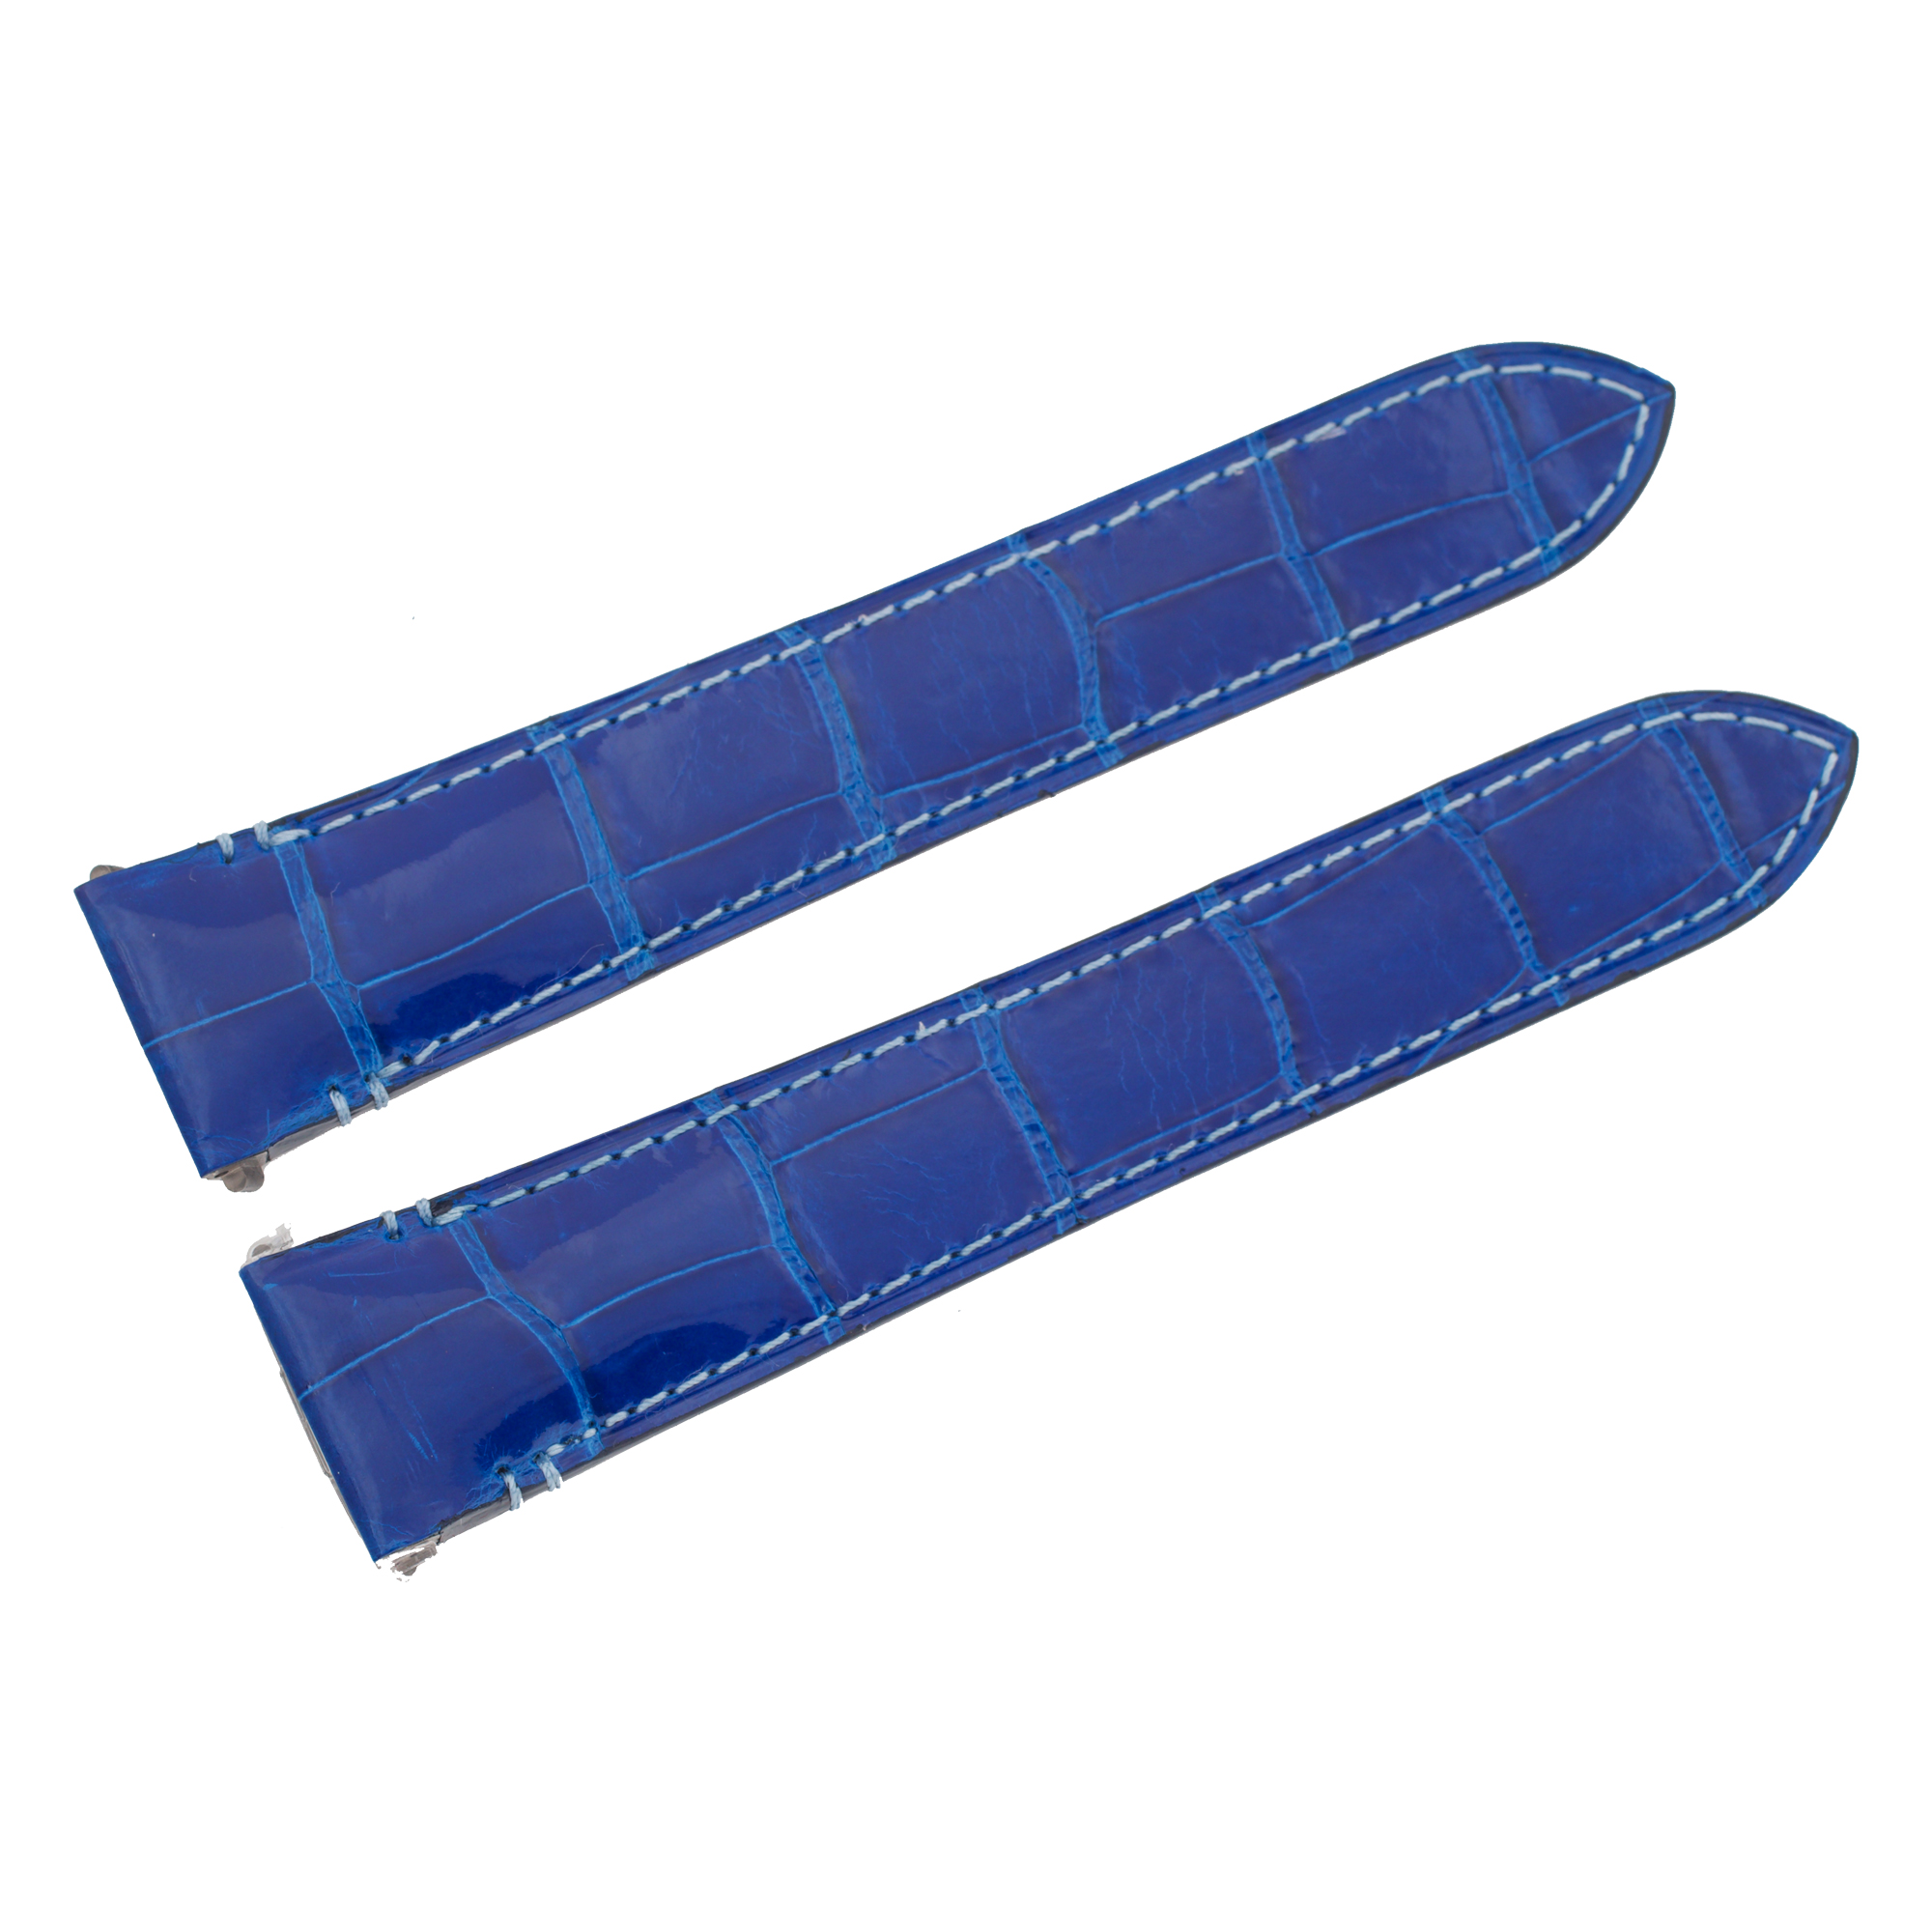 Cartier 21mm vibrant blue strap for Roadster; each side measures 4.5''